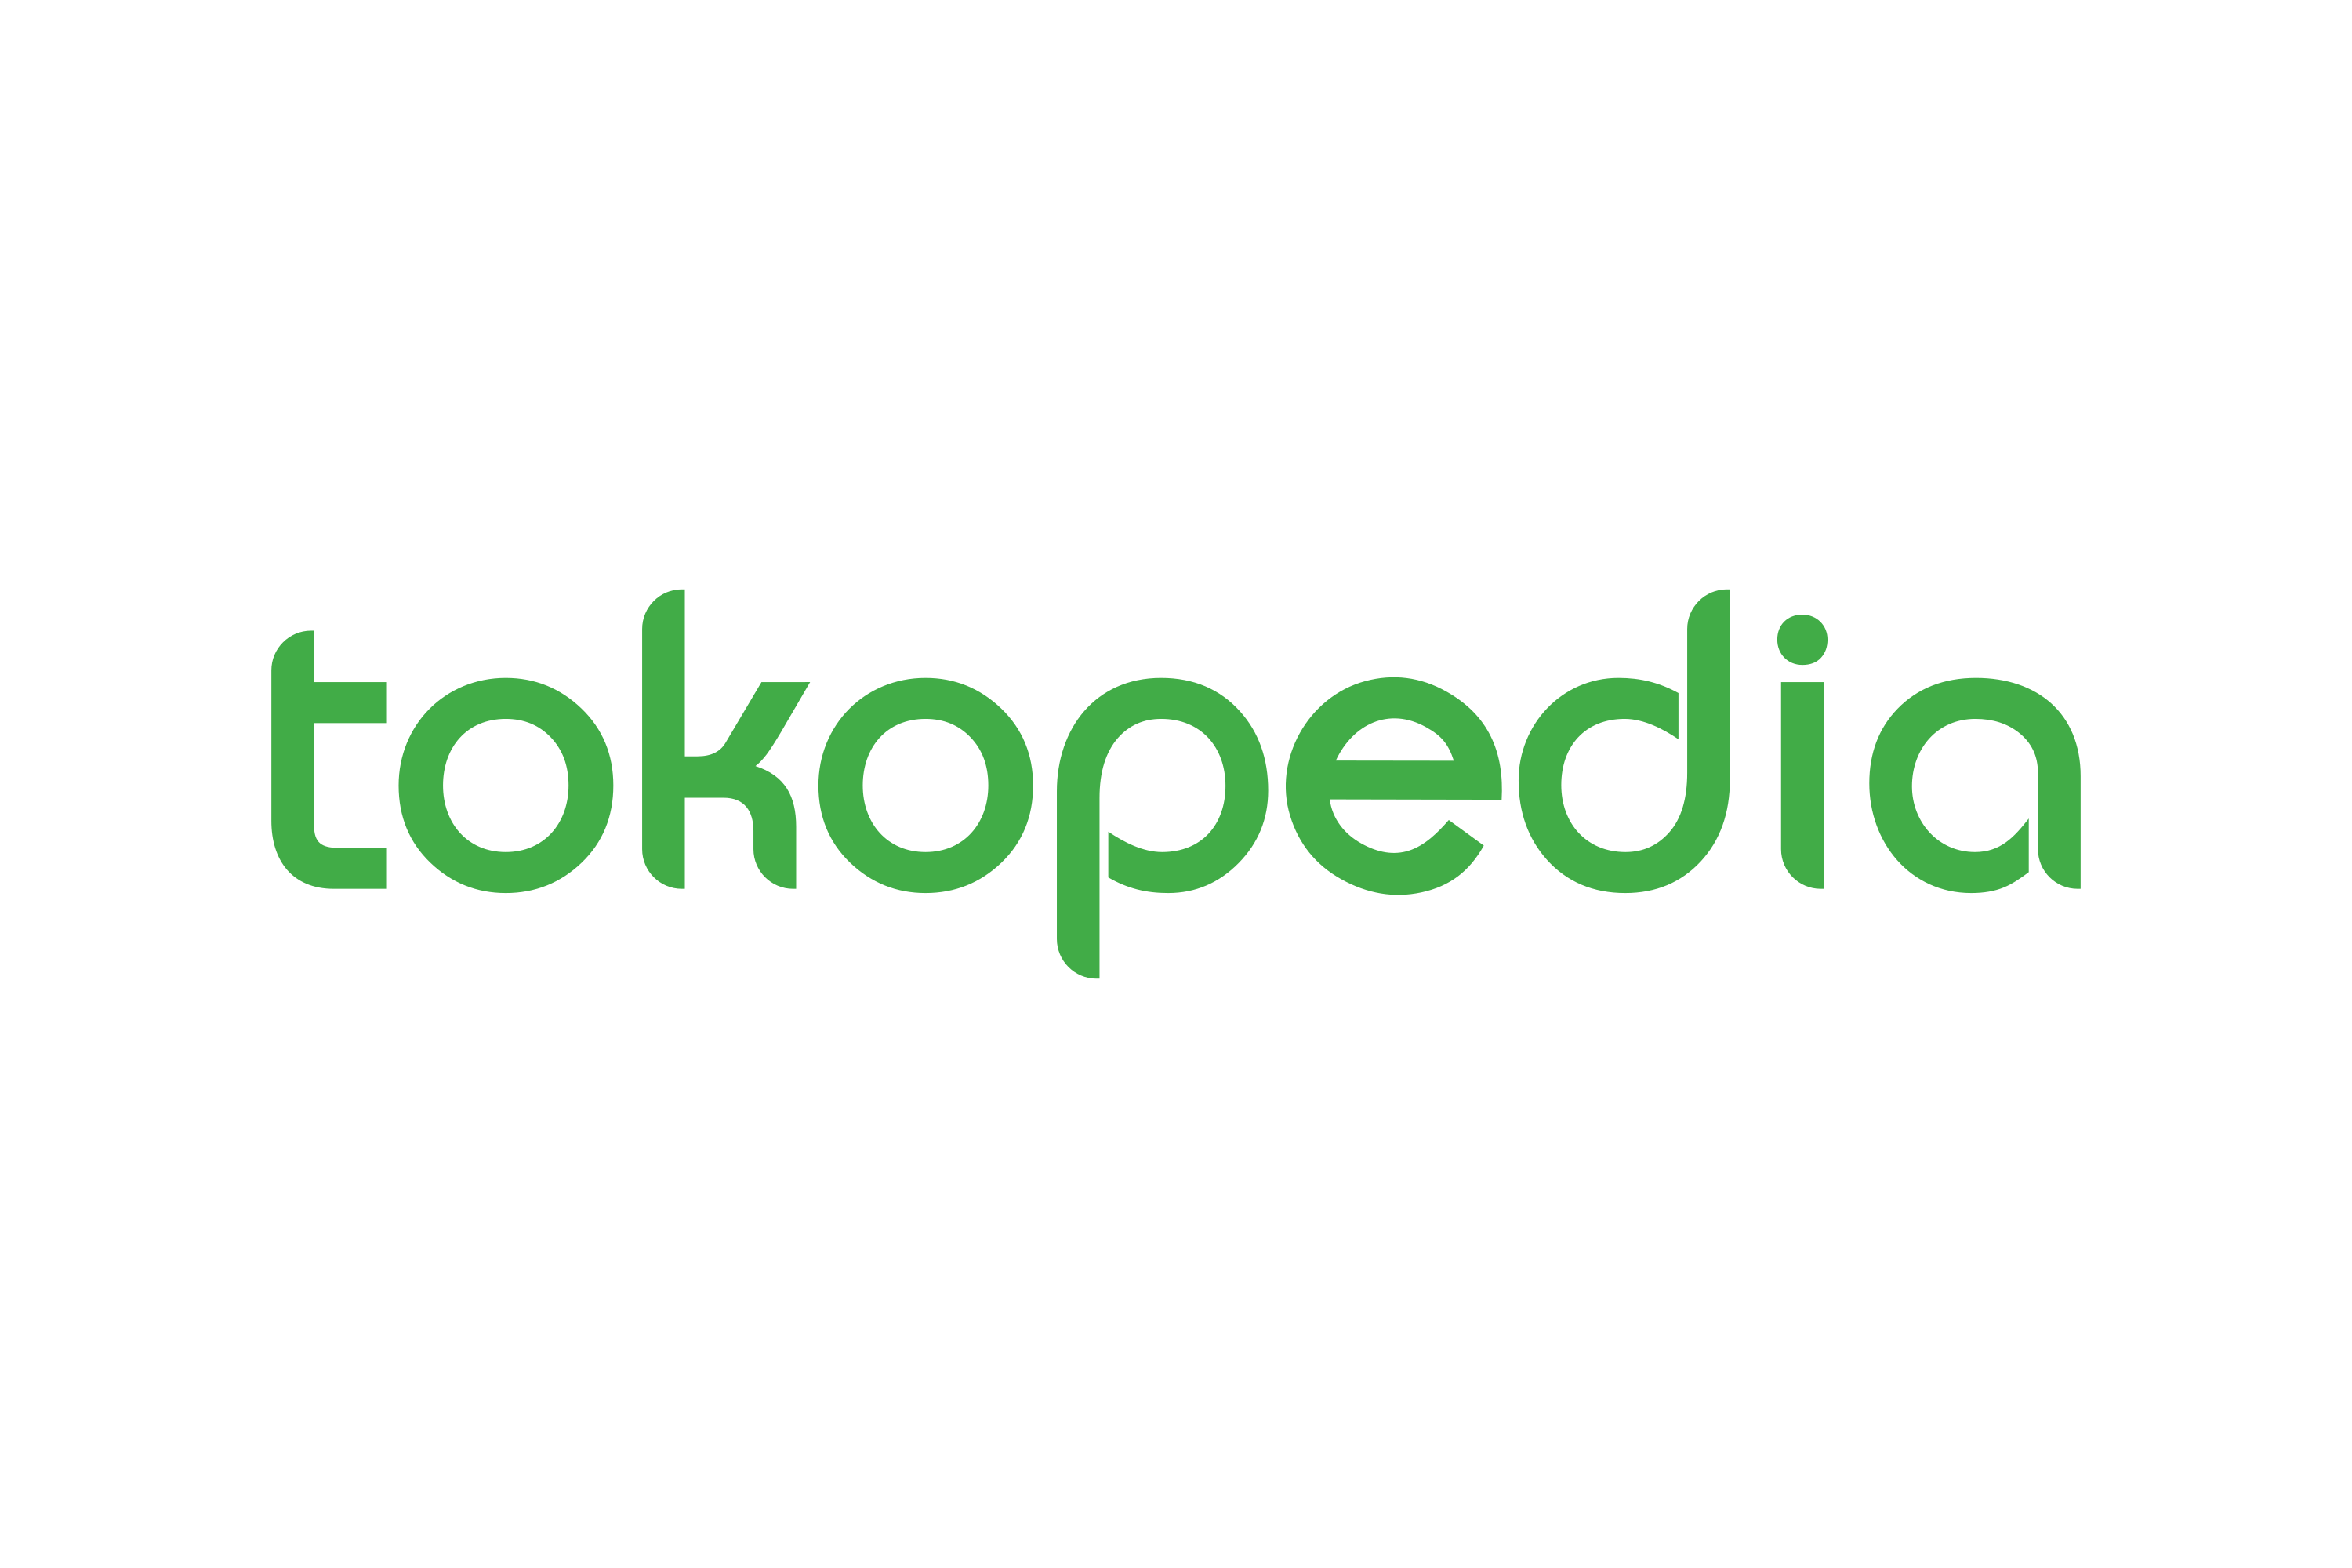 Tokopedia Logo - Download Tokopedia Logo in SVG Vector or PNG File Format